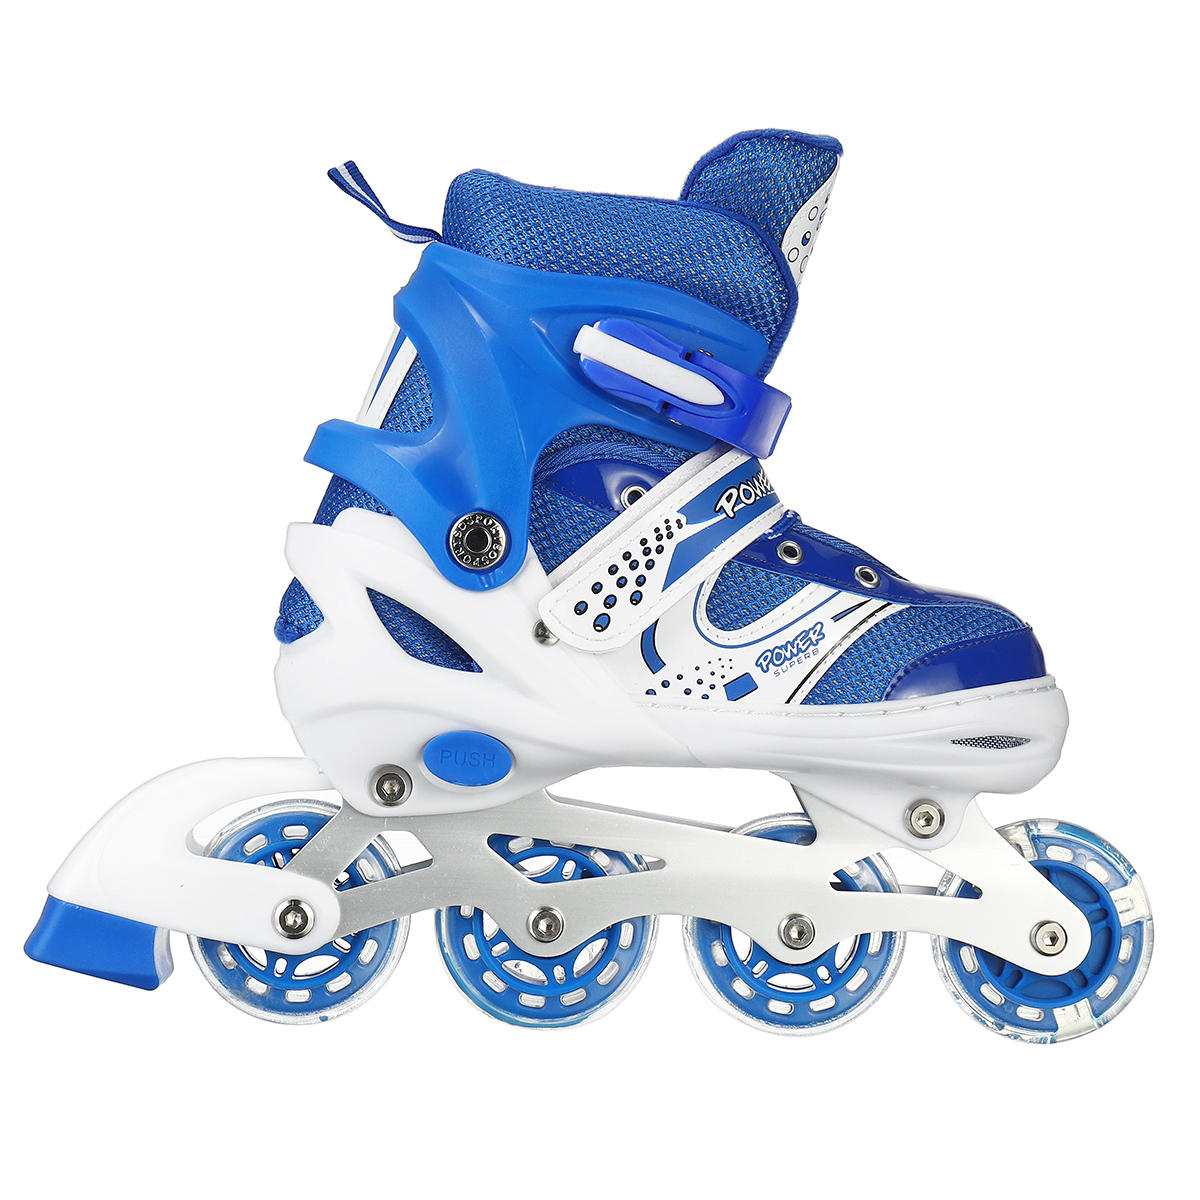 Childrens-Adjustable-Skates-Full-Set-Single-Flash-Ice-Skate-Shoes-for-Boys-and-Girls-Inline-Skates-f-1697070-11